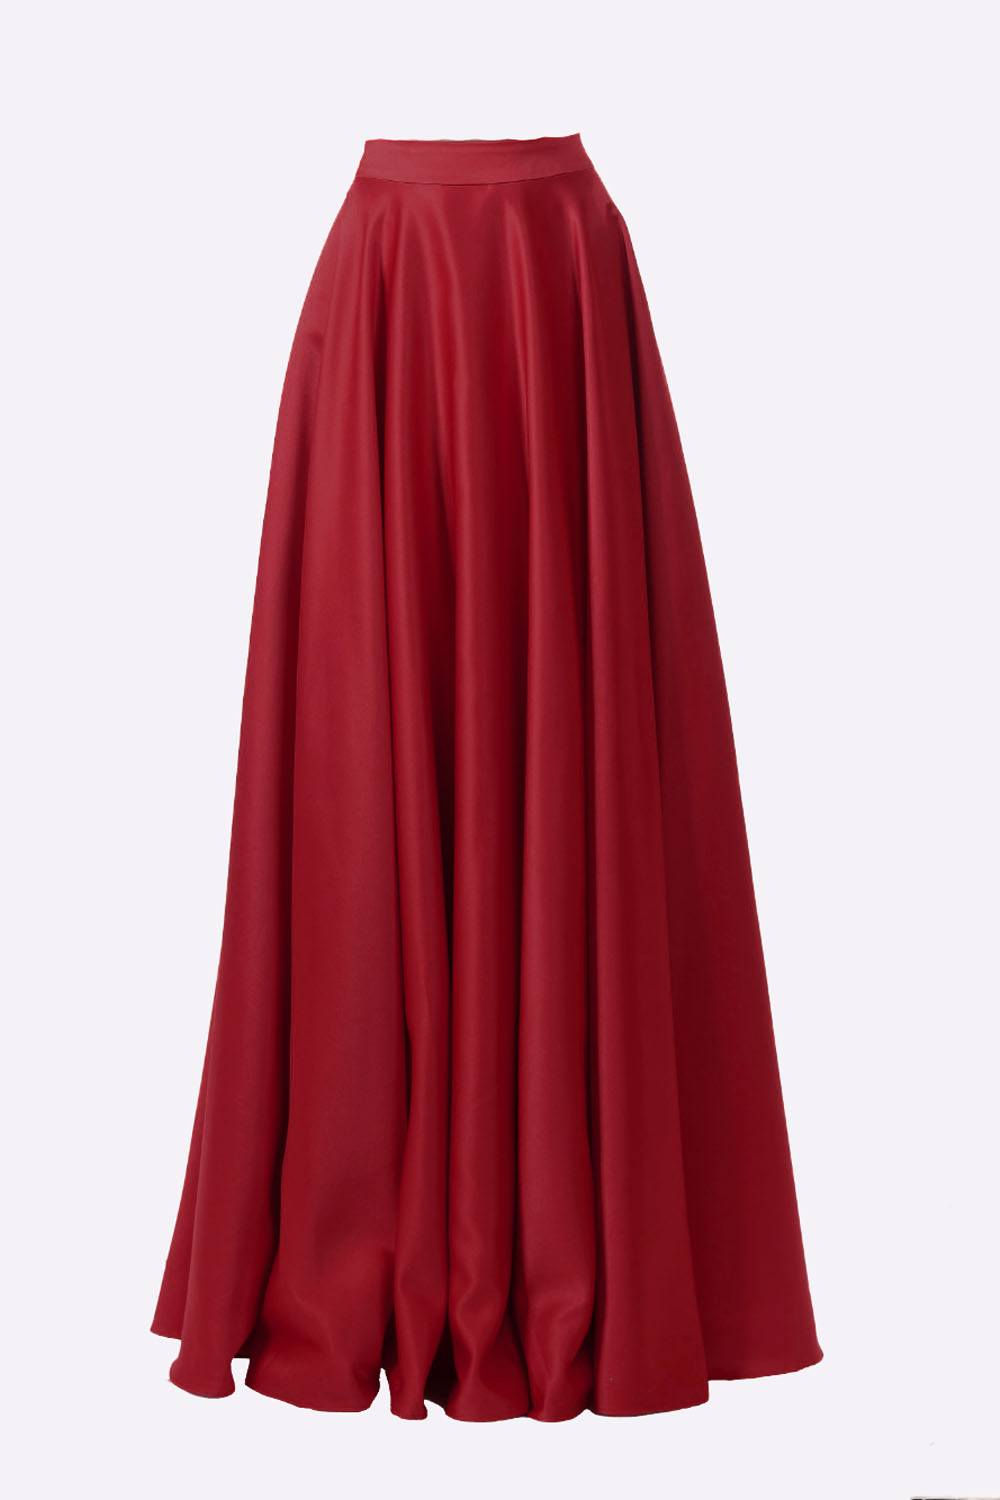 Poly USA SK10 - Long Burgundy Satin Skirt Side Pockets